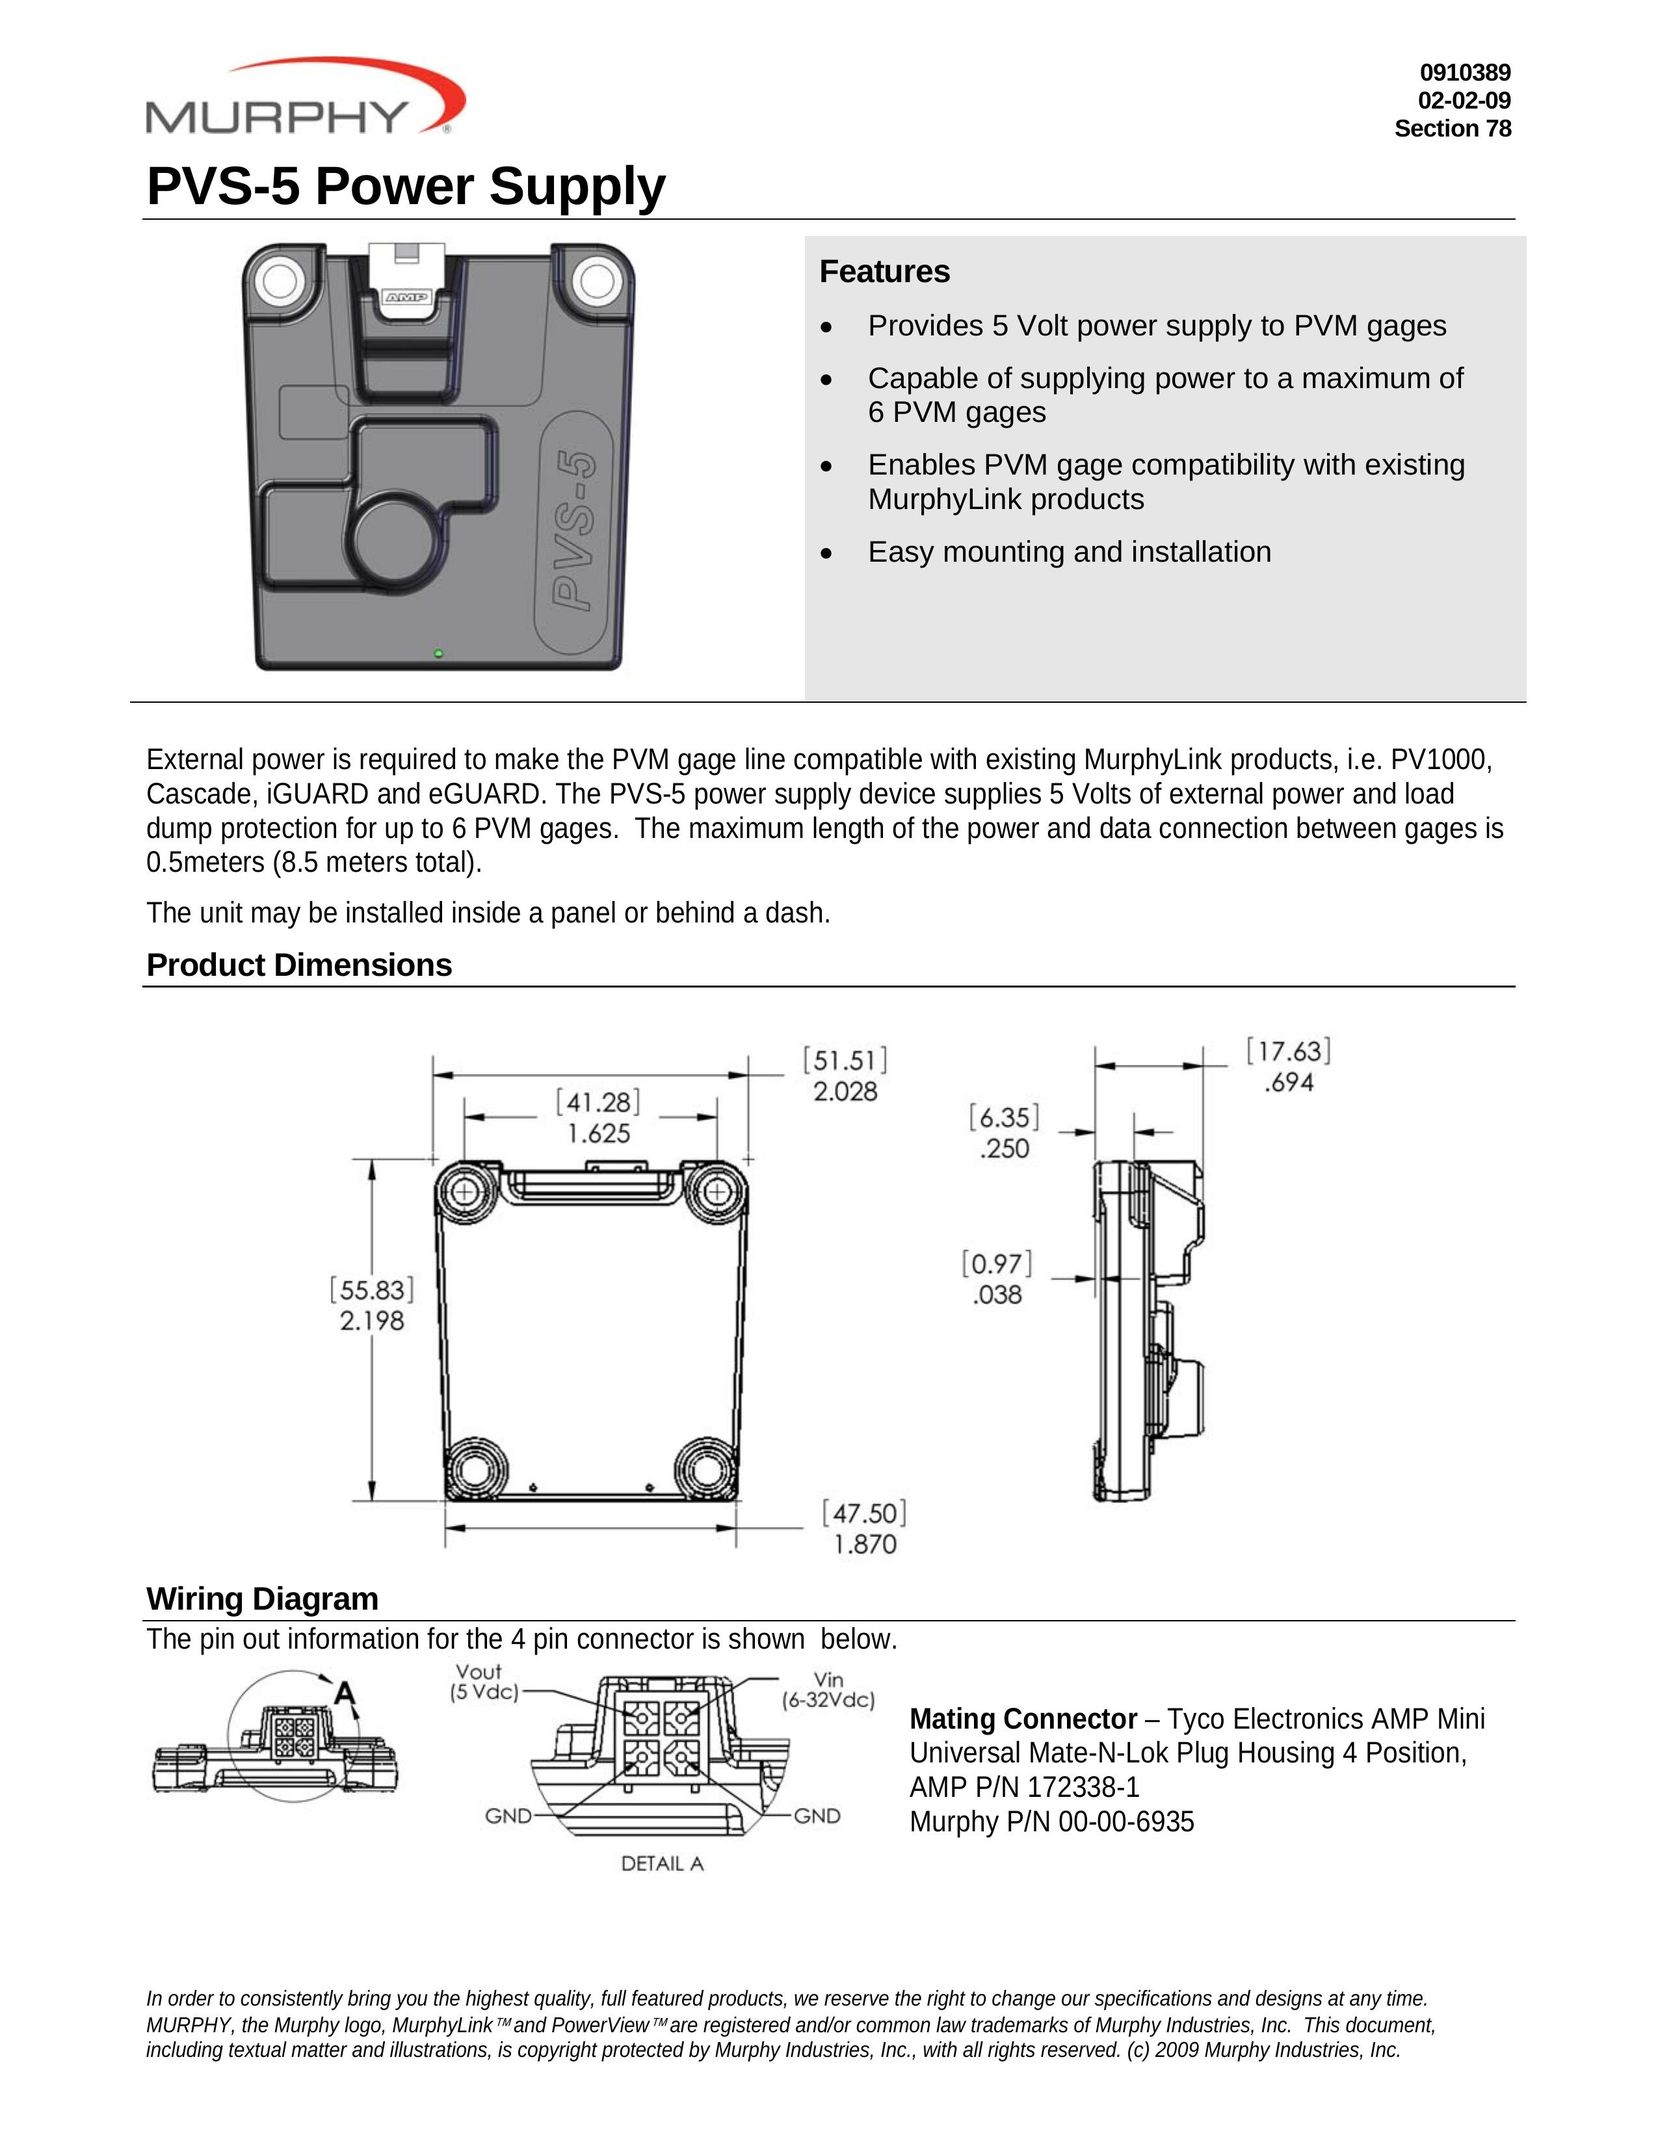 Murphy PVS-5 Power Supply User Manual